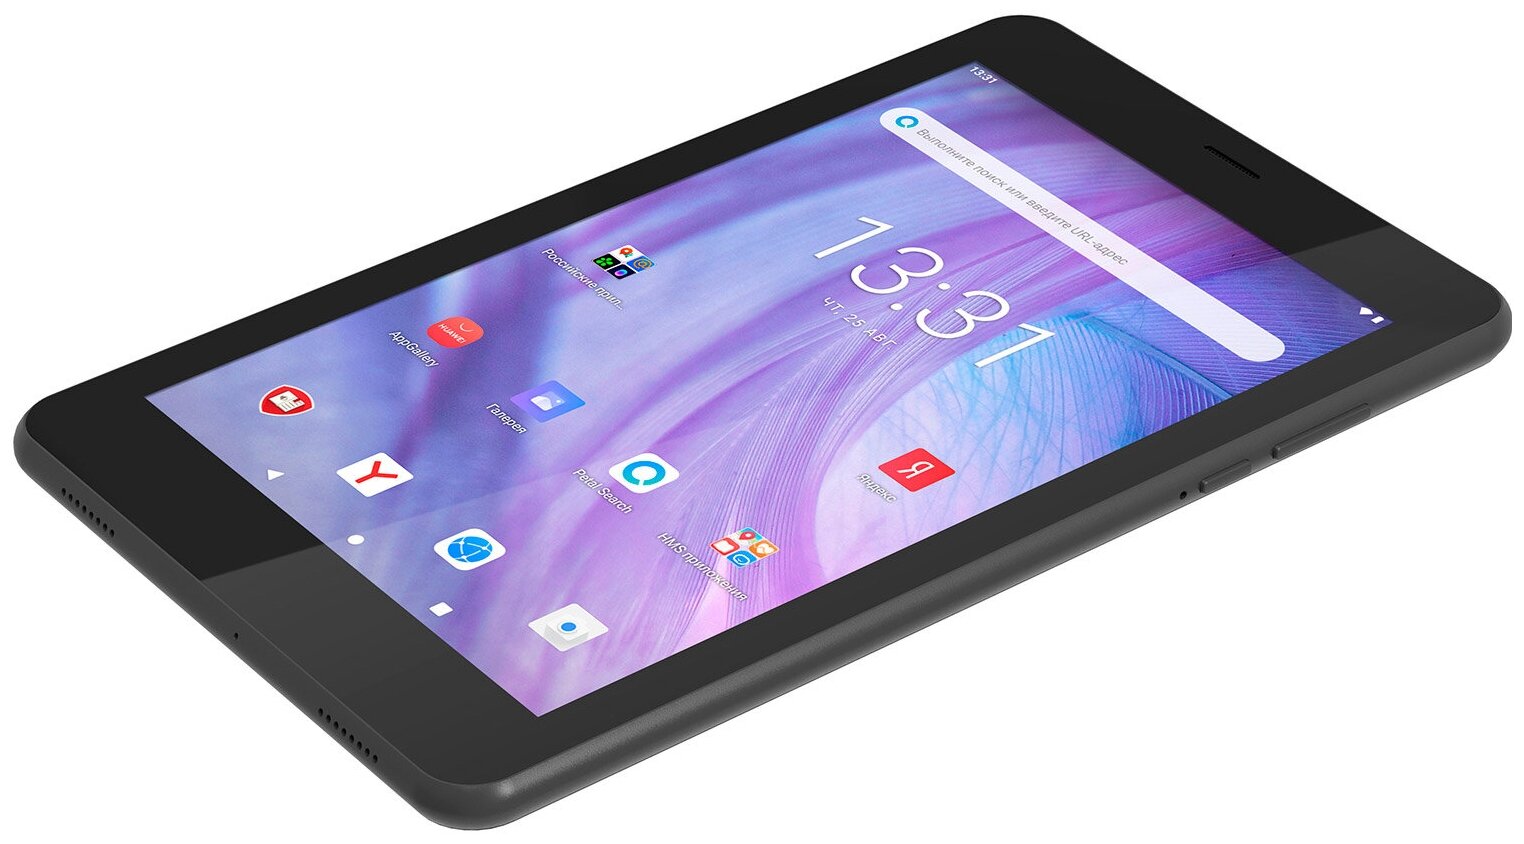 Планшет Topdevice Tablet A8 8.0' 2/32GB Темно-серый